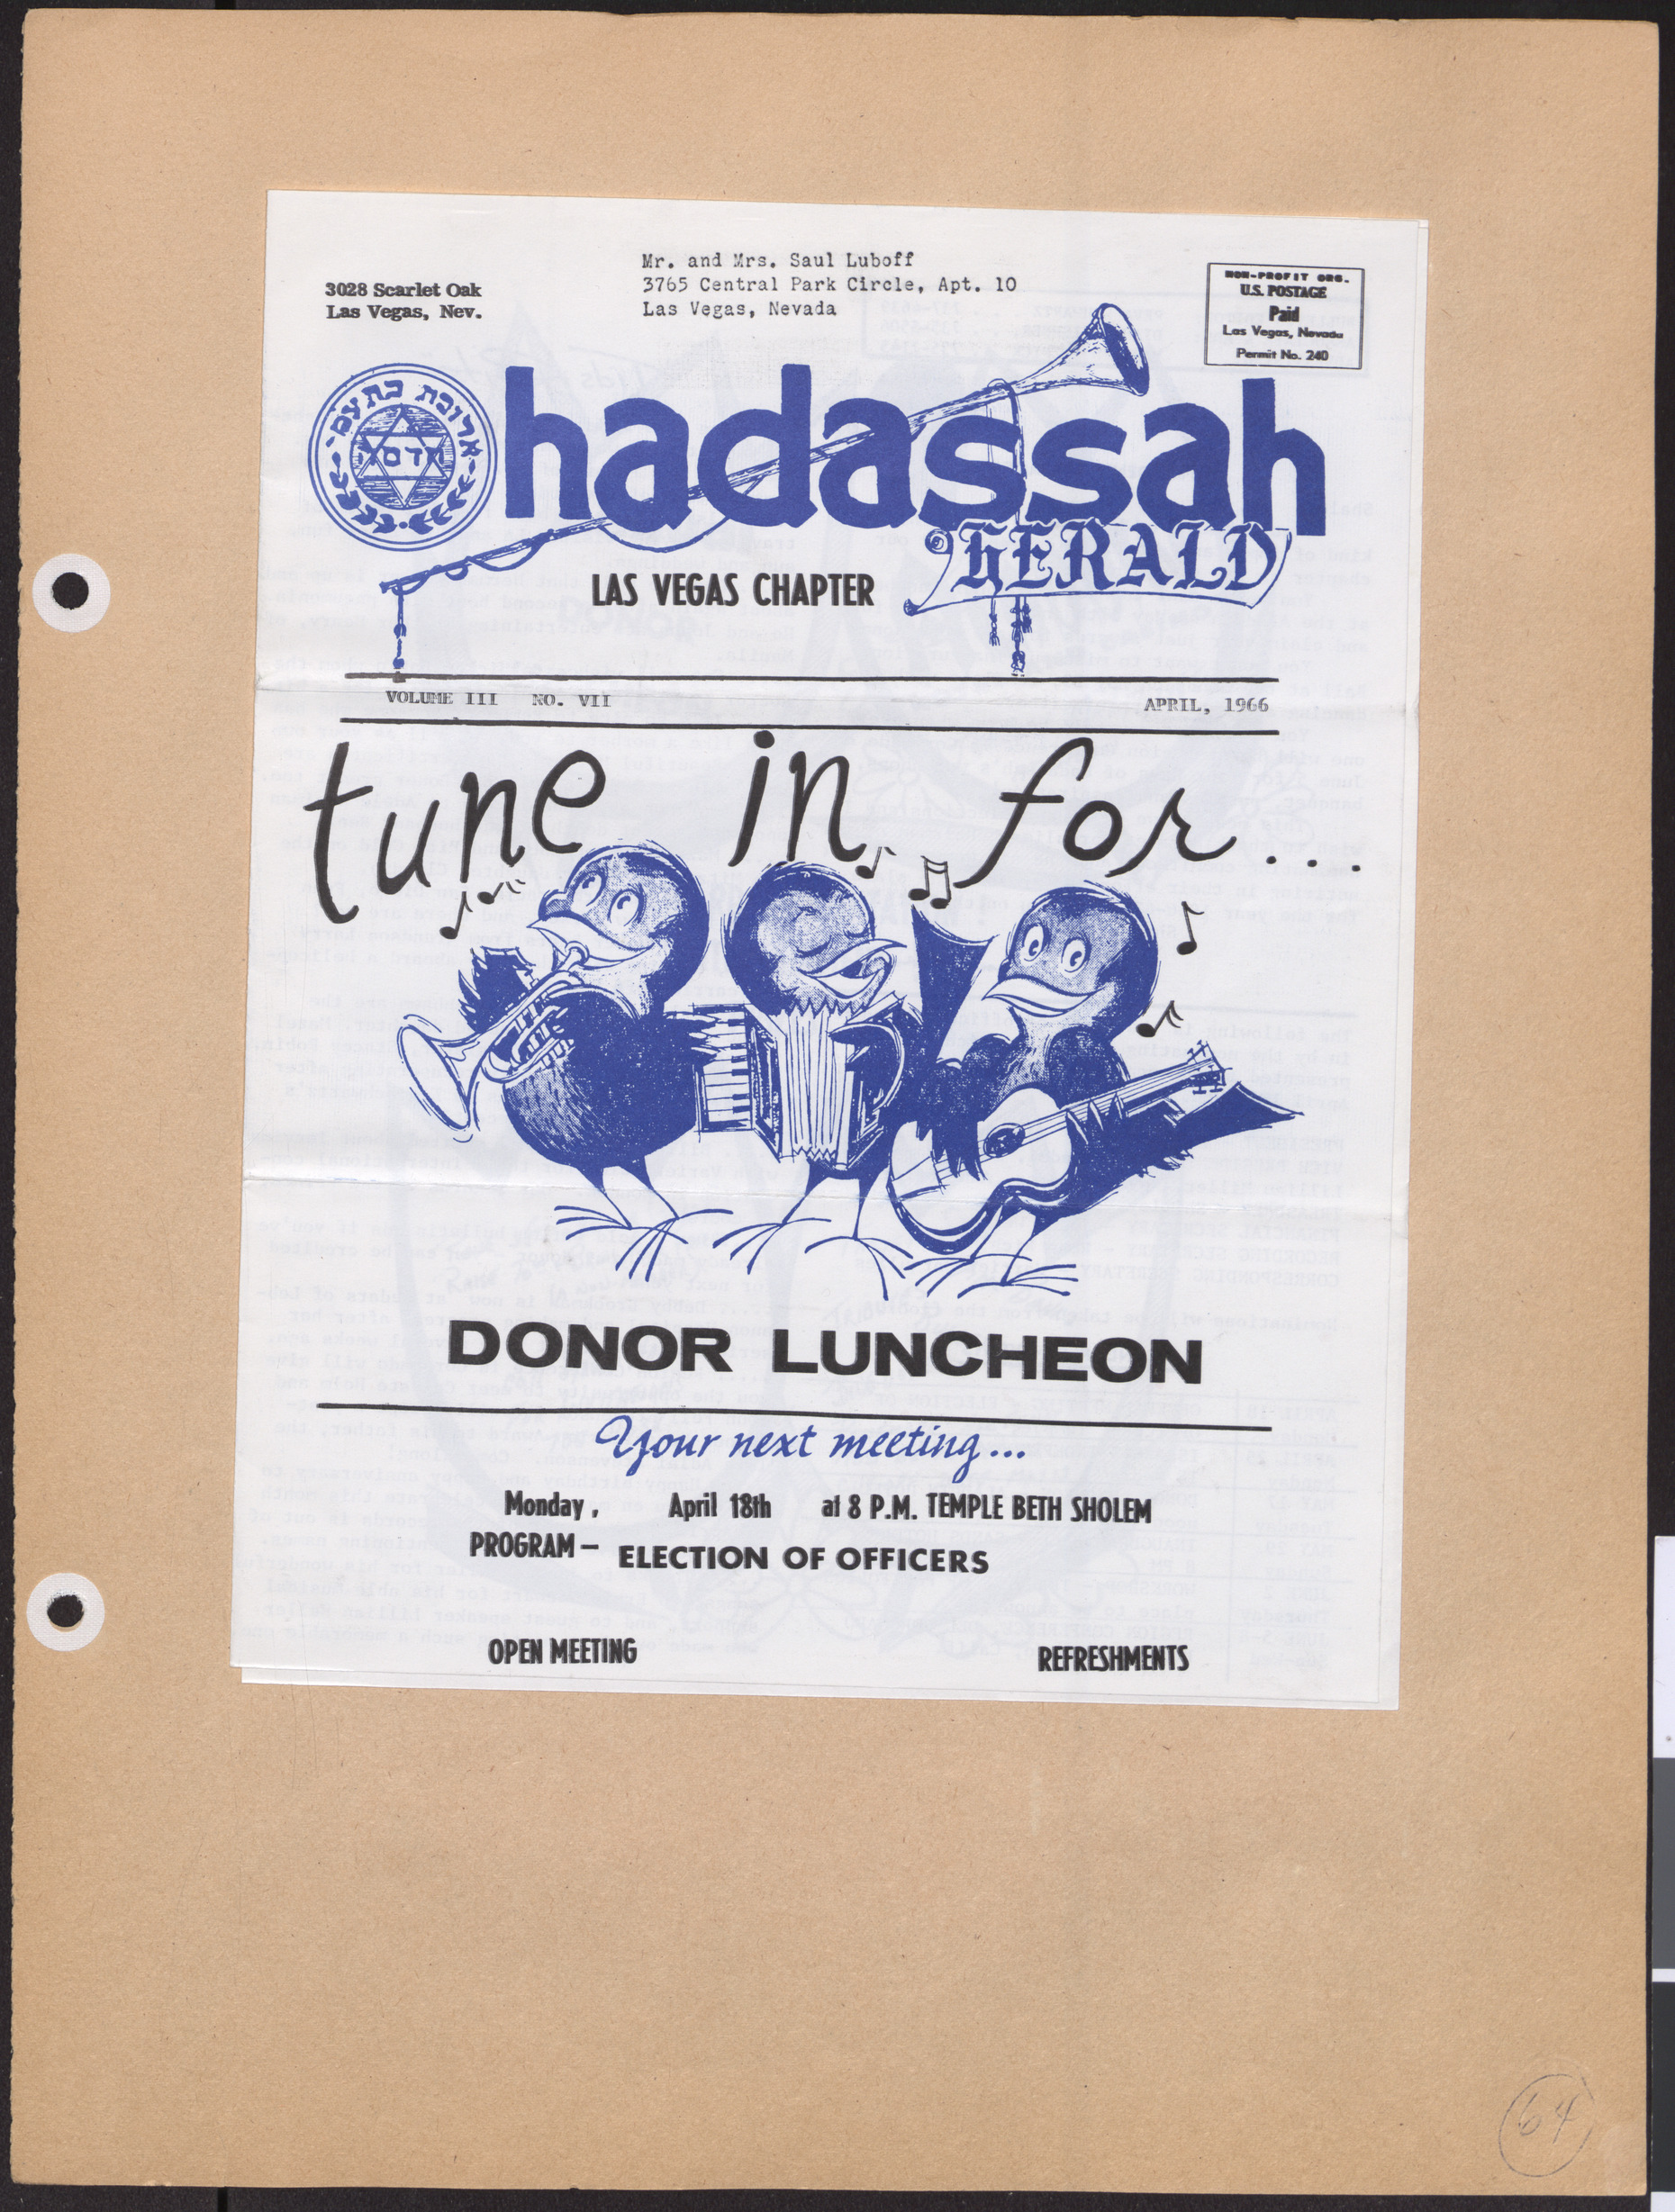 Hadassah Las Vegas Chapter newsletter, April 1966, cover